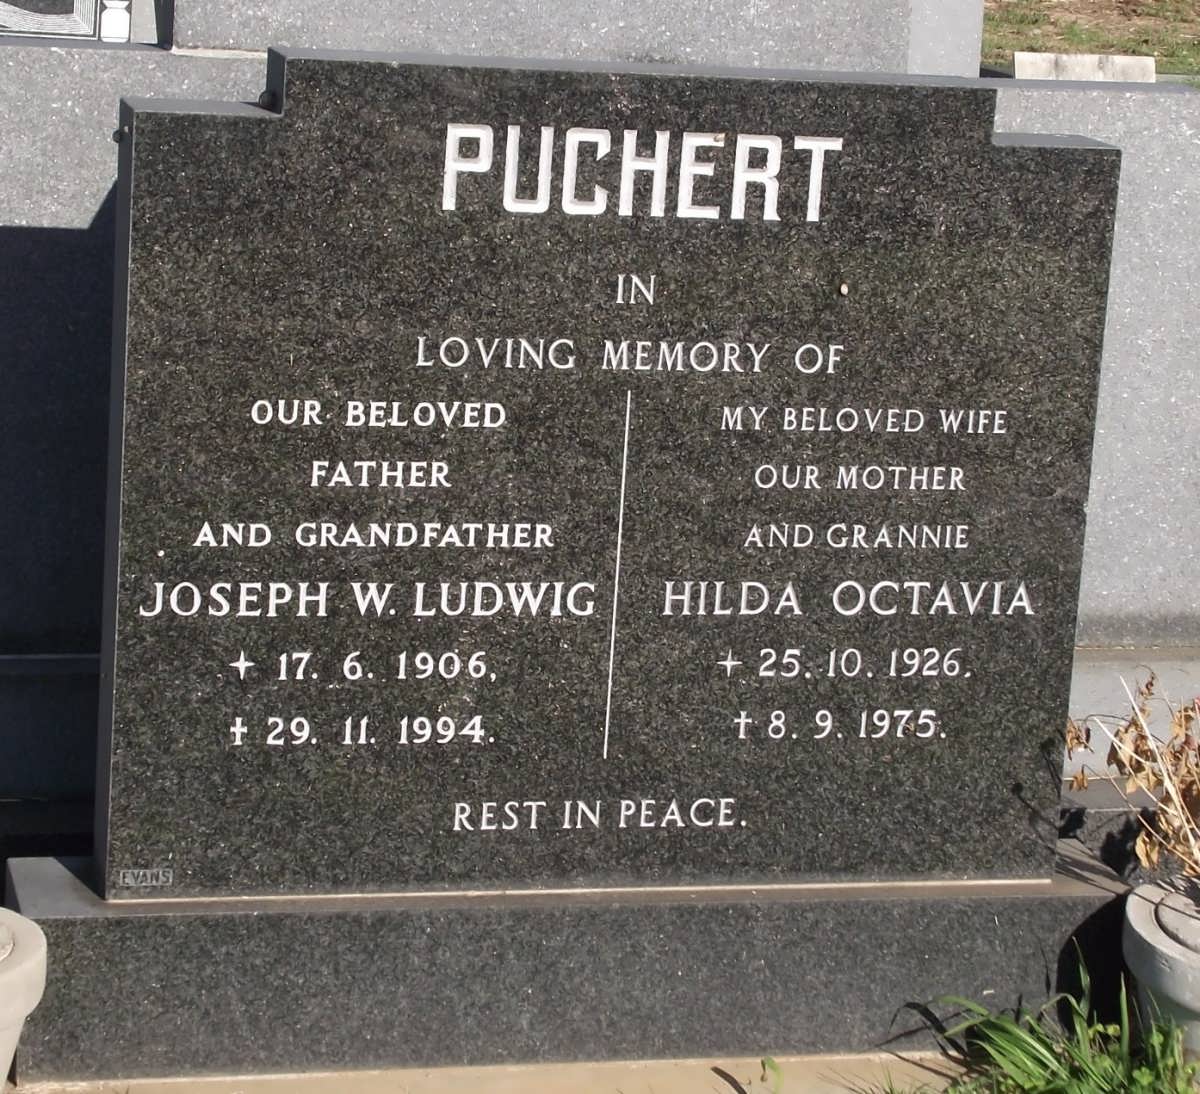 PUCHERT Joseph W. Ludwig 1906-1994 & Hilda Octavia 1926-1975